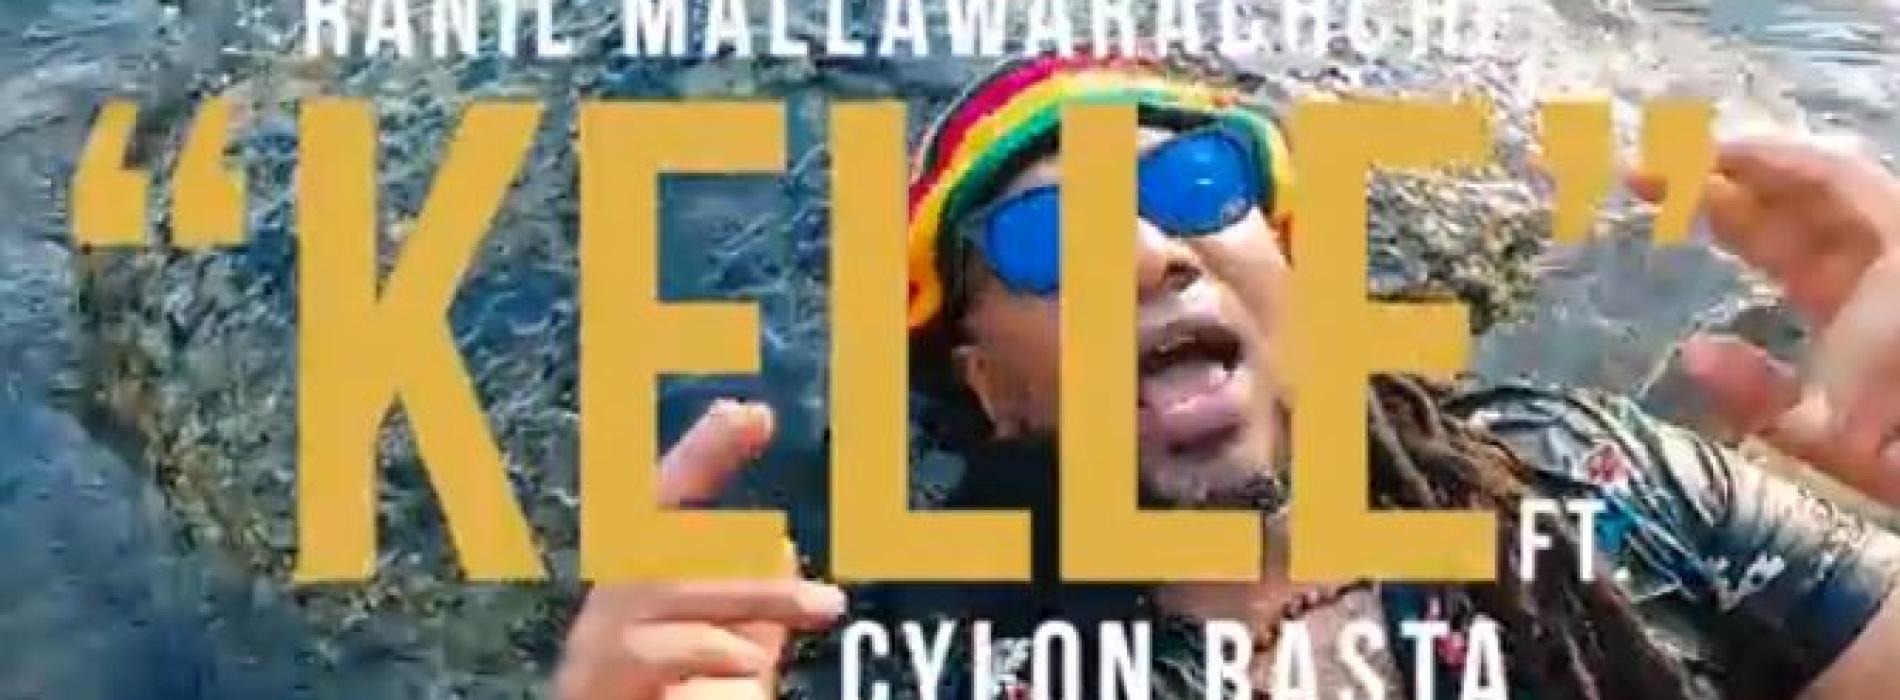 New Music : Kelle – Ranil Mallawarachchi ft Ceylon Rasta (Onedrope Reggae Remake)